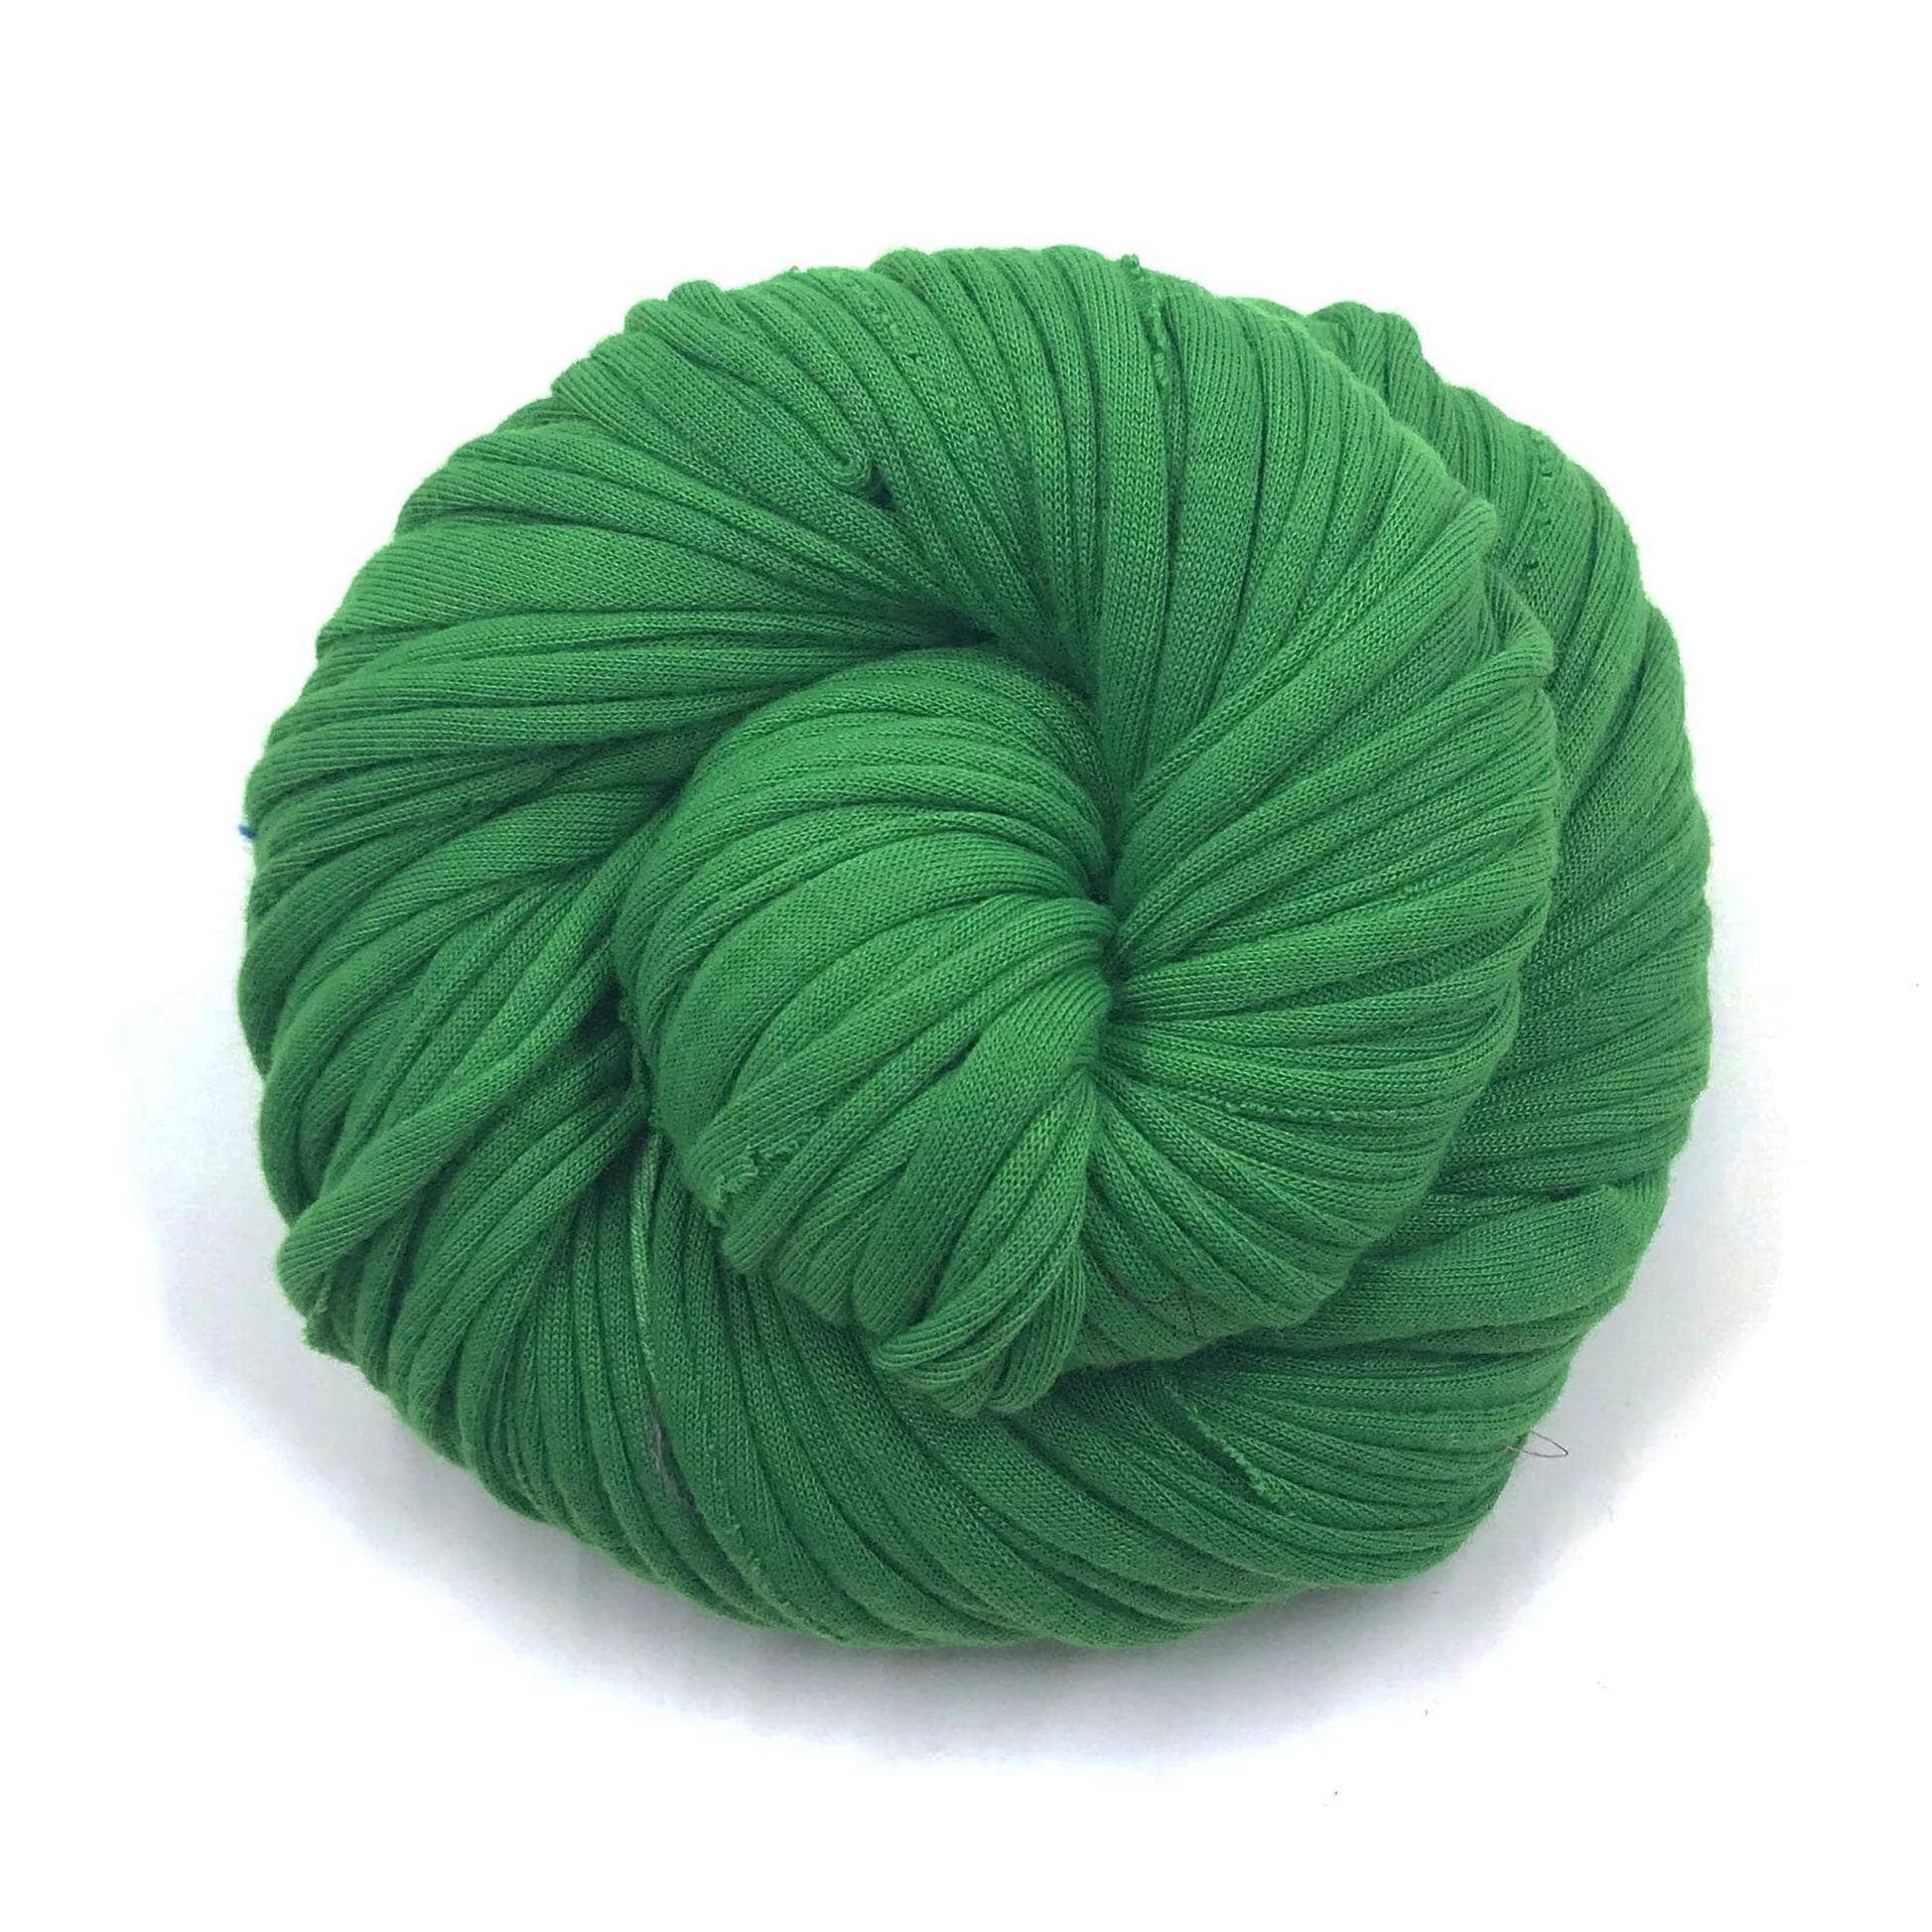 Cotton t-shirt yarn donut ball in Irish Dream (green) on white background